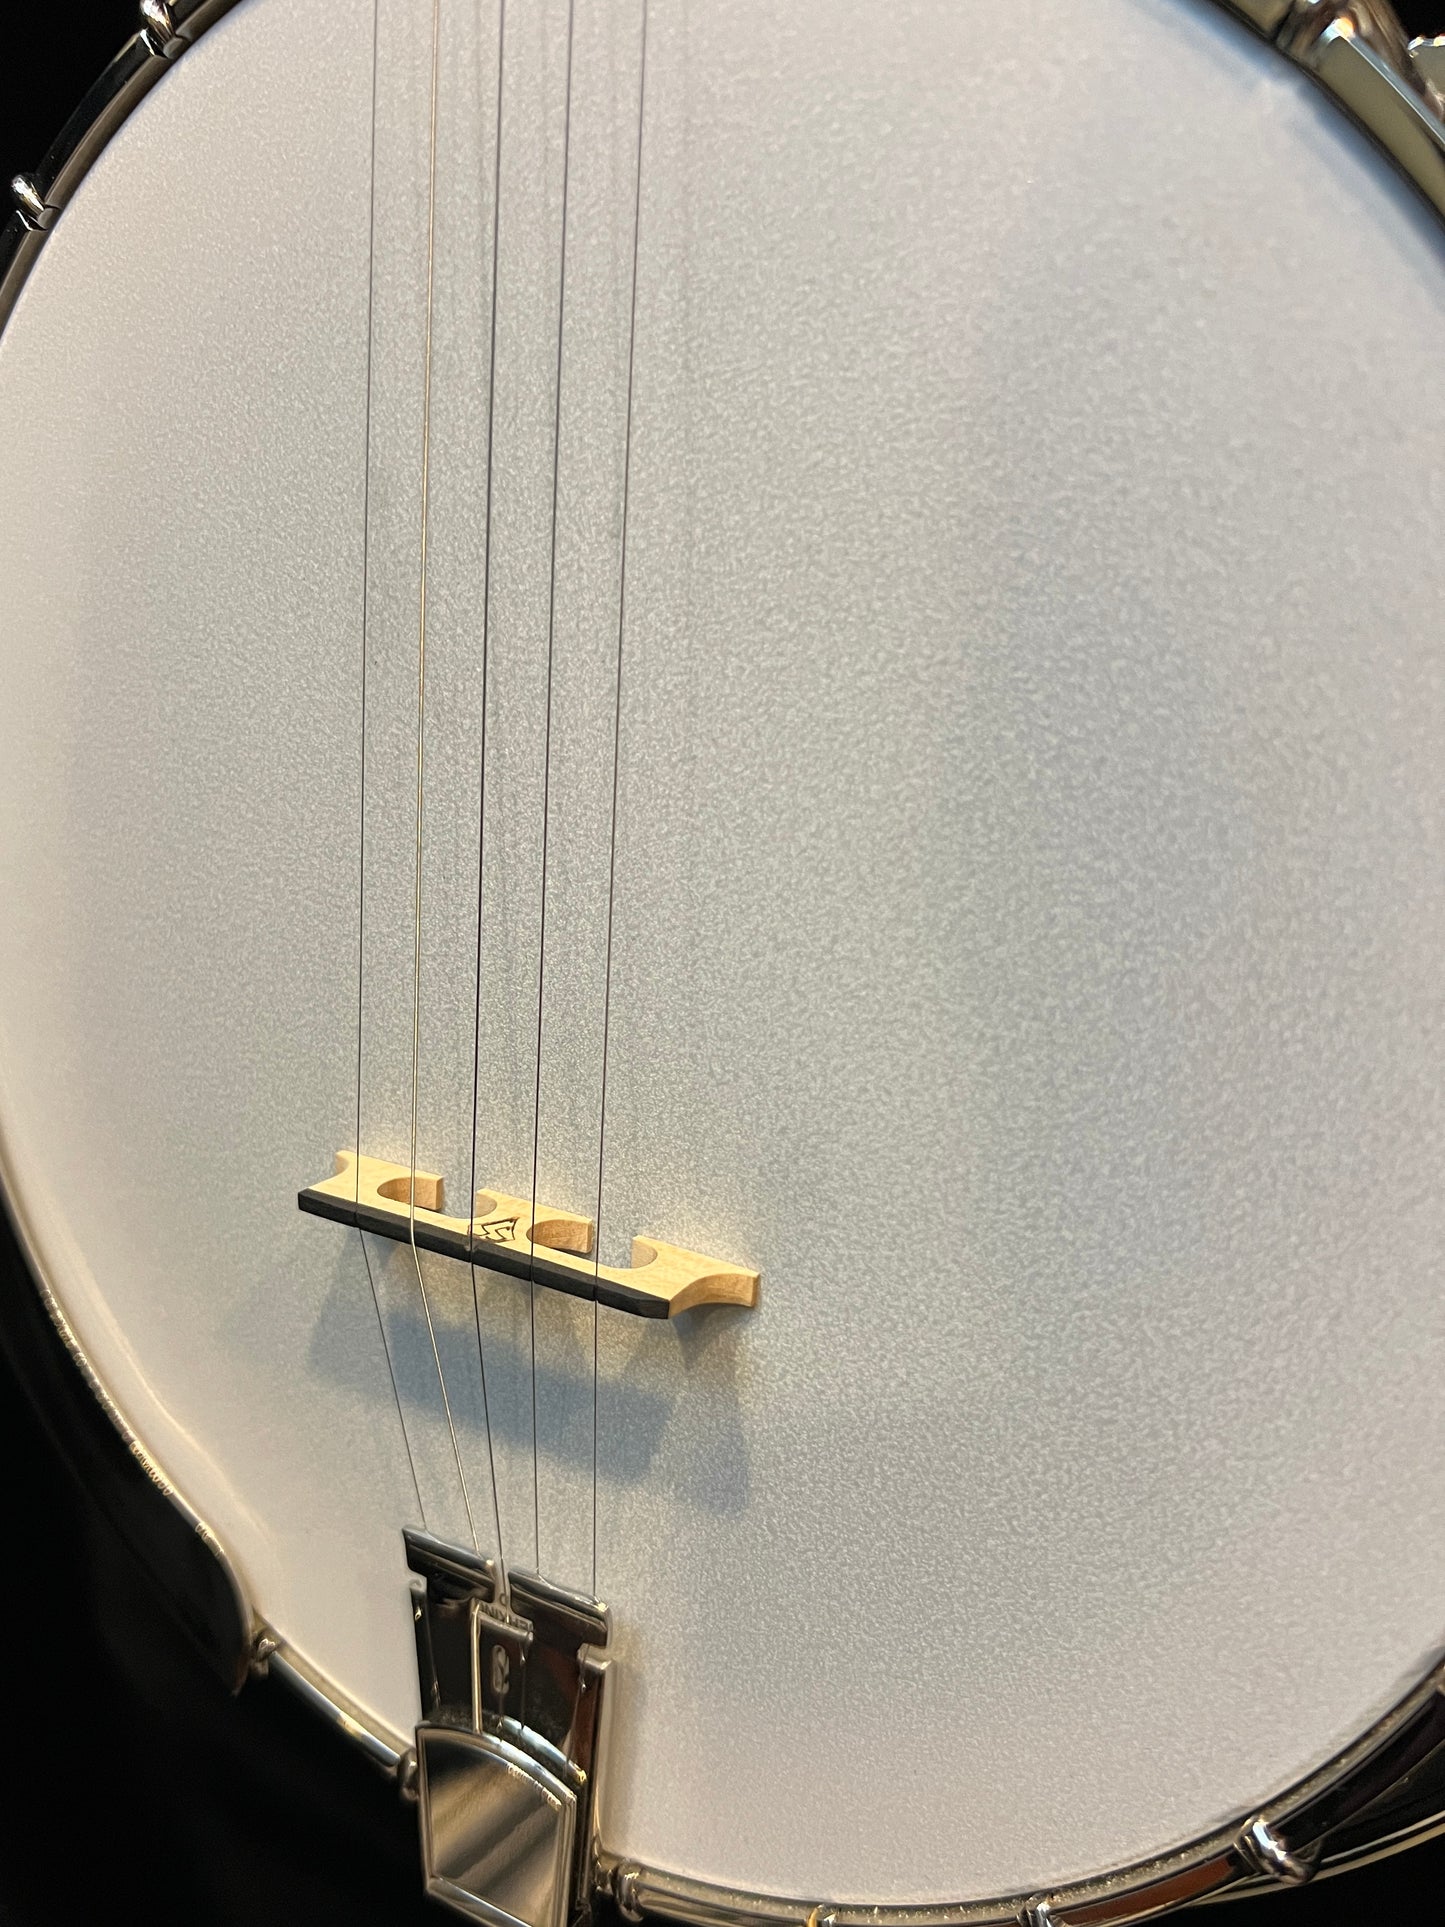 SOLD - Mastertone Gold Tone OB-2 Bowtie 5-String Banjo with Resonator